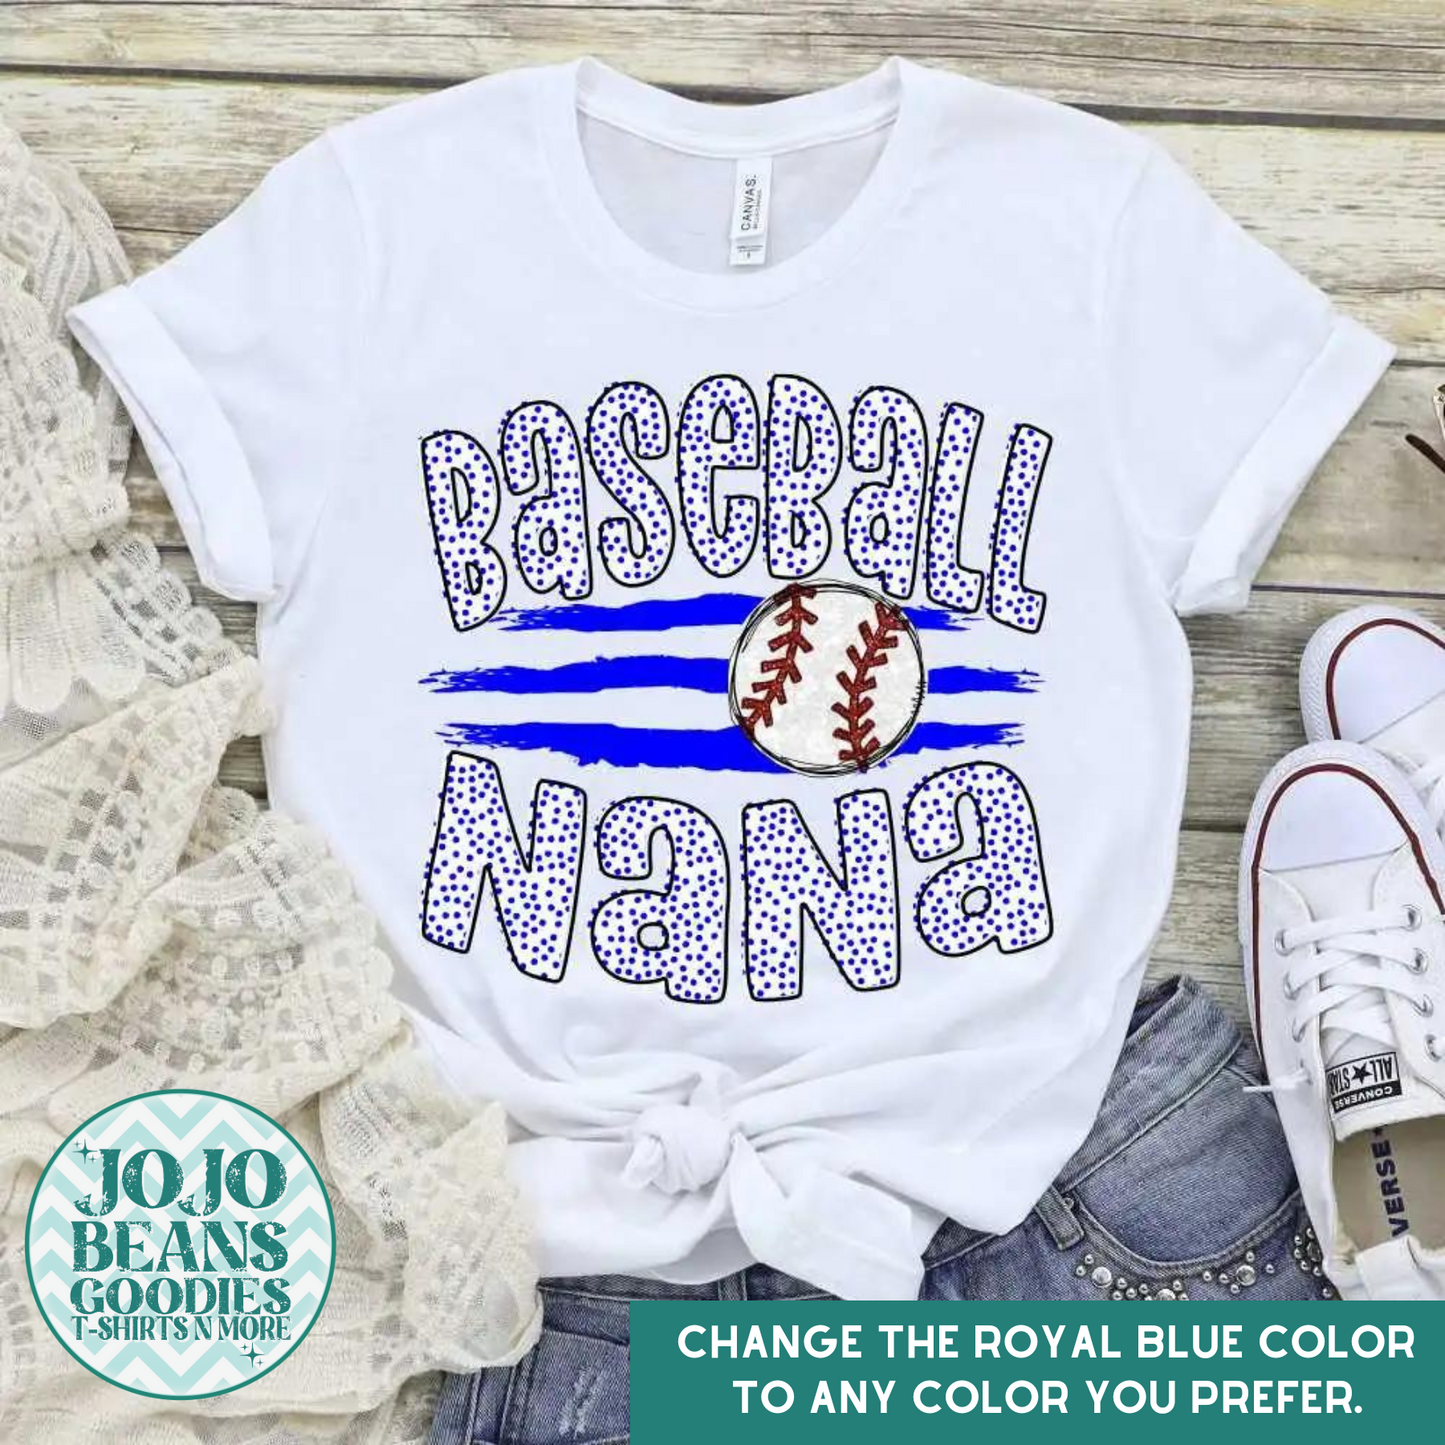 Baseball Nana - Ball & Stripes - Customize